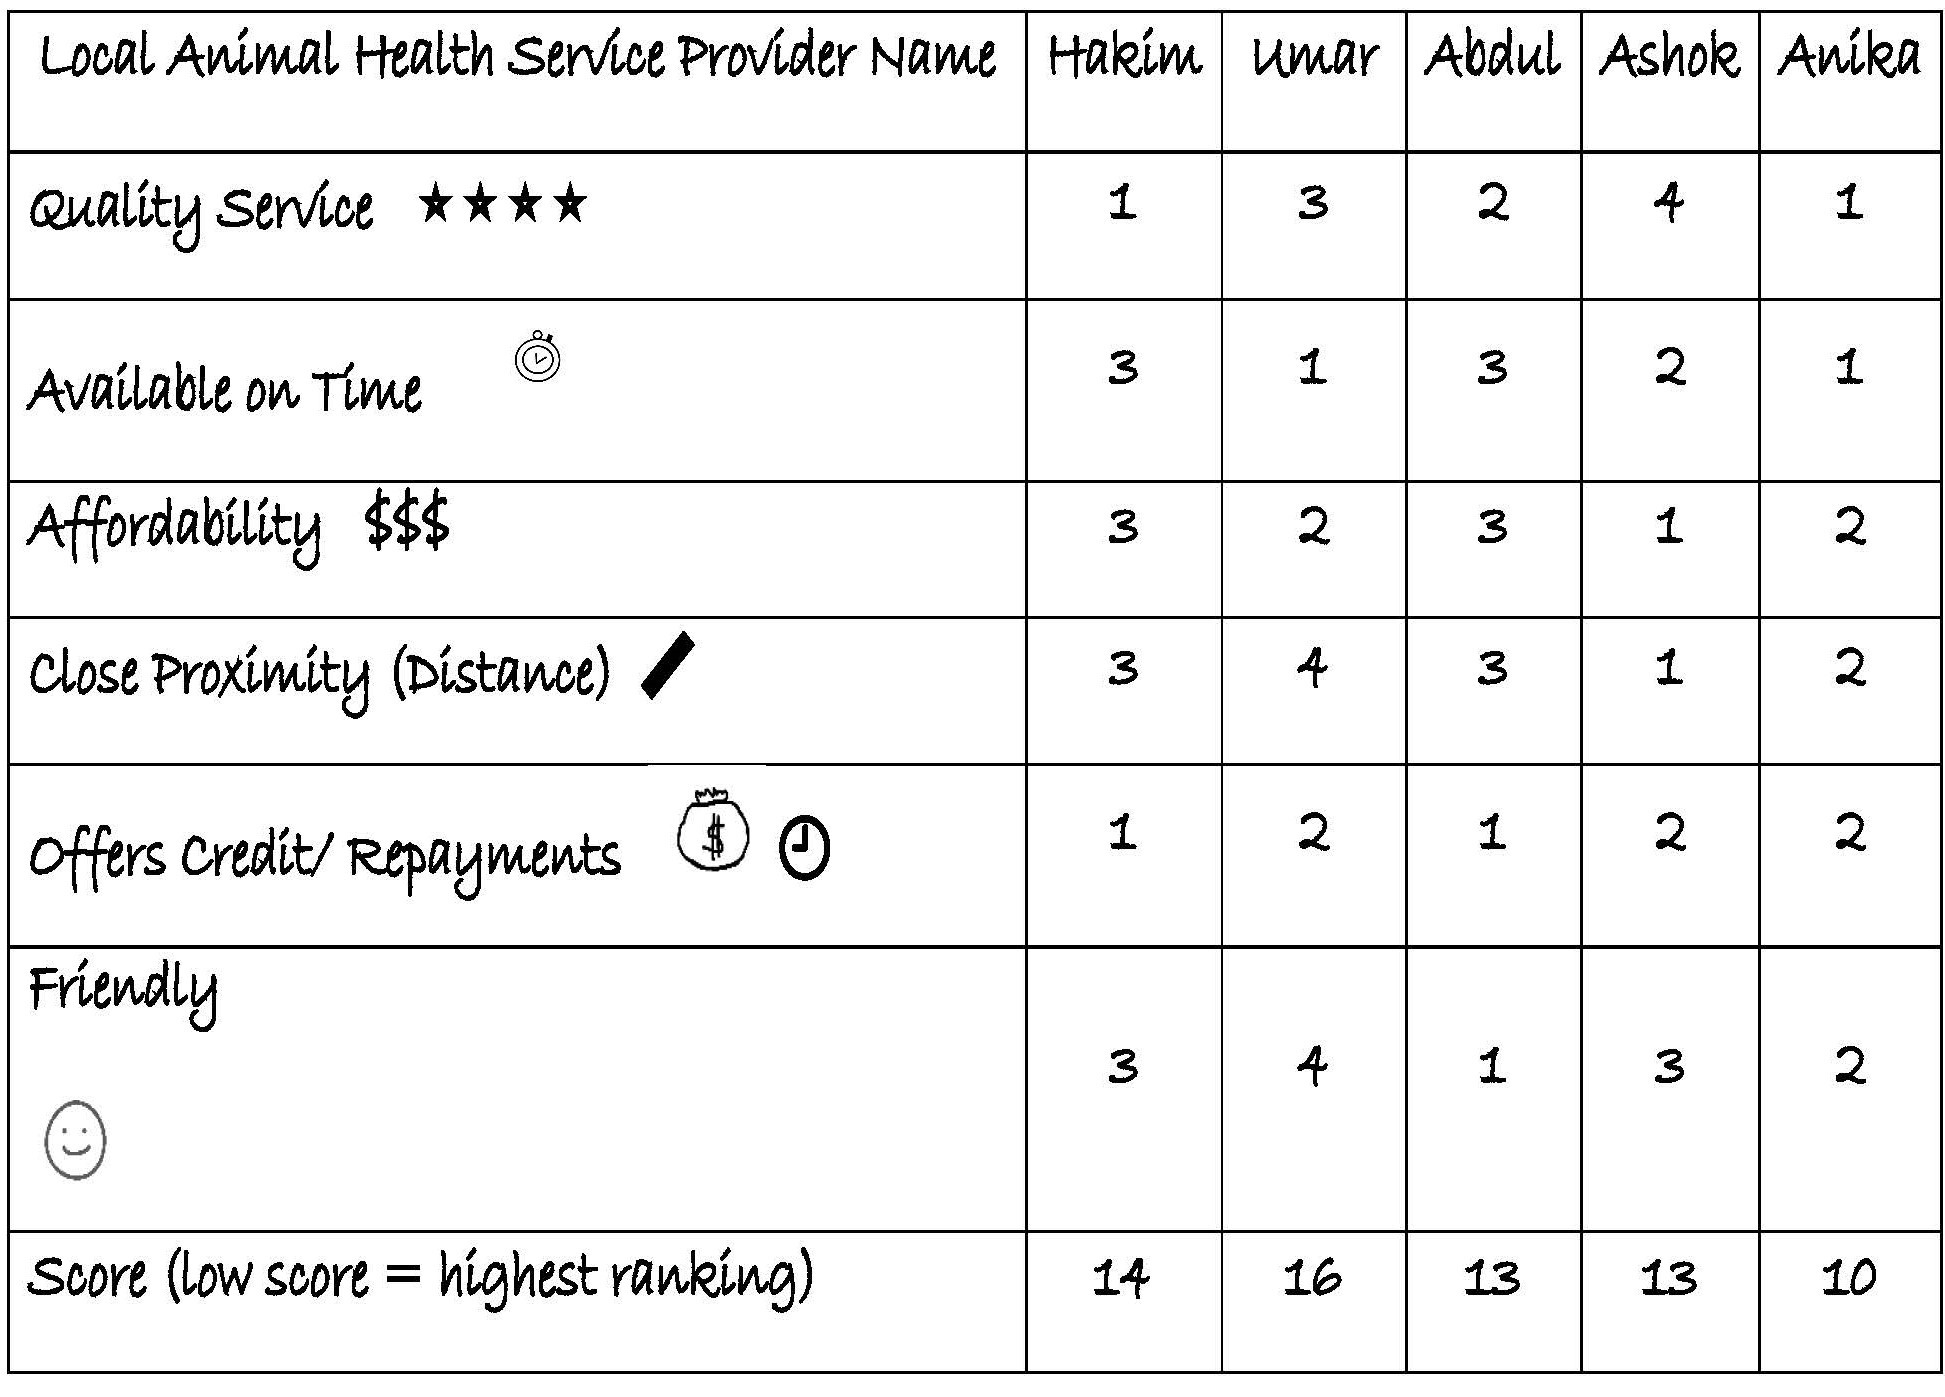 Figure T9c Matrix ranking of local animal health service providers